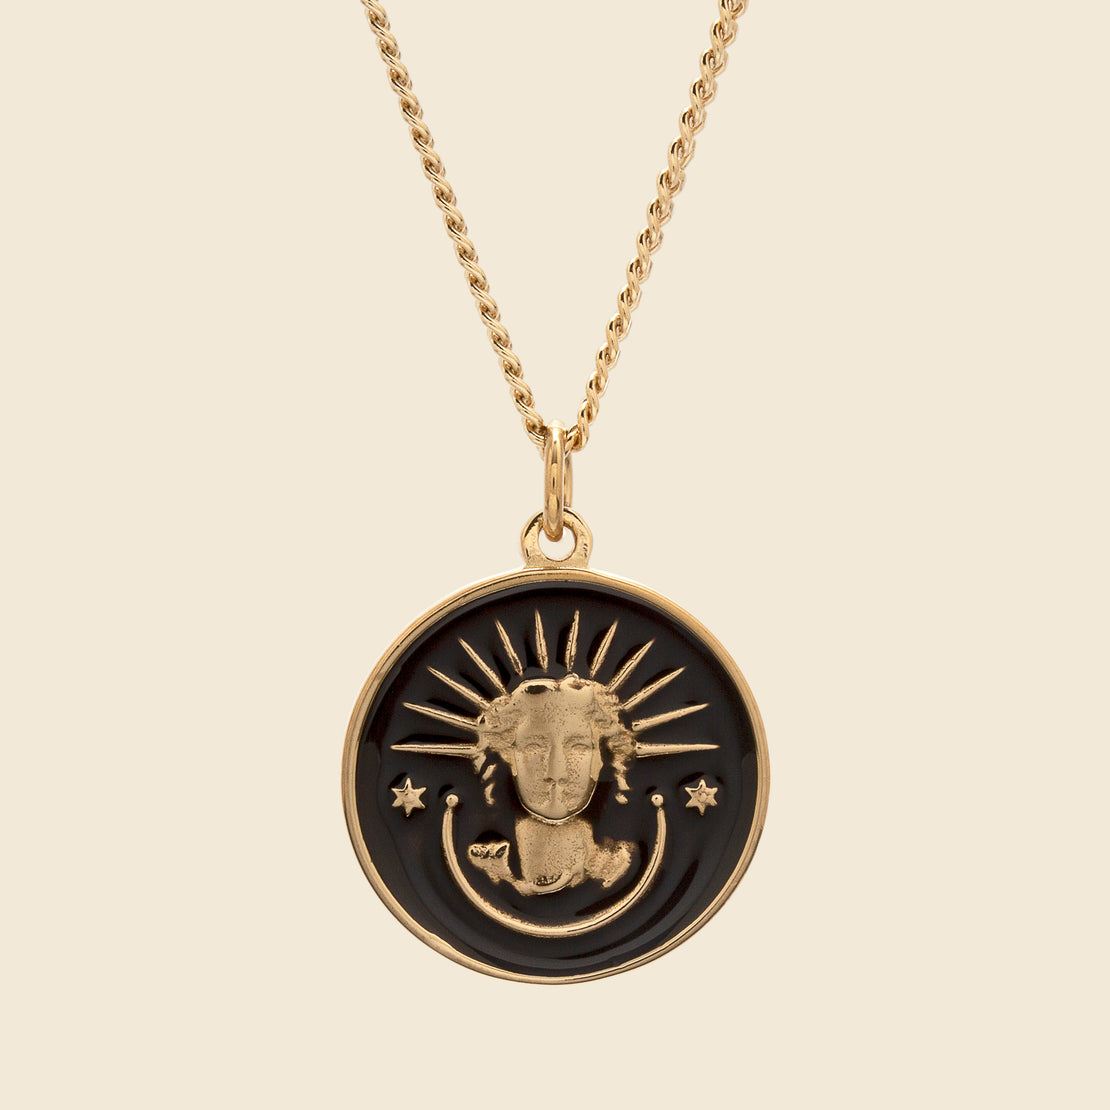 Miansai Lady Liberty Pendant Necklace - Black Enamel/Gold Vermeil